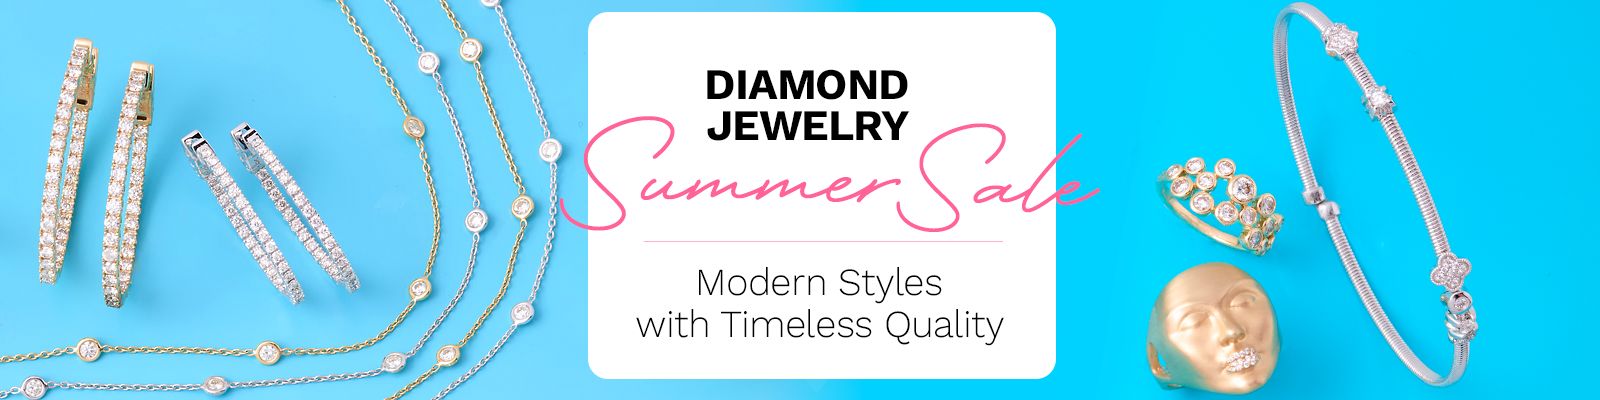 Diamond Jewelry Summer Sale 211-960, 212-301, 211-955, 212-376, 191-009